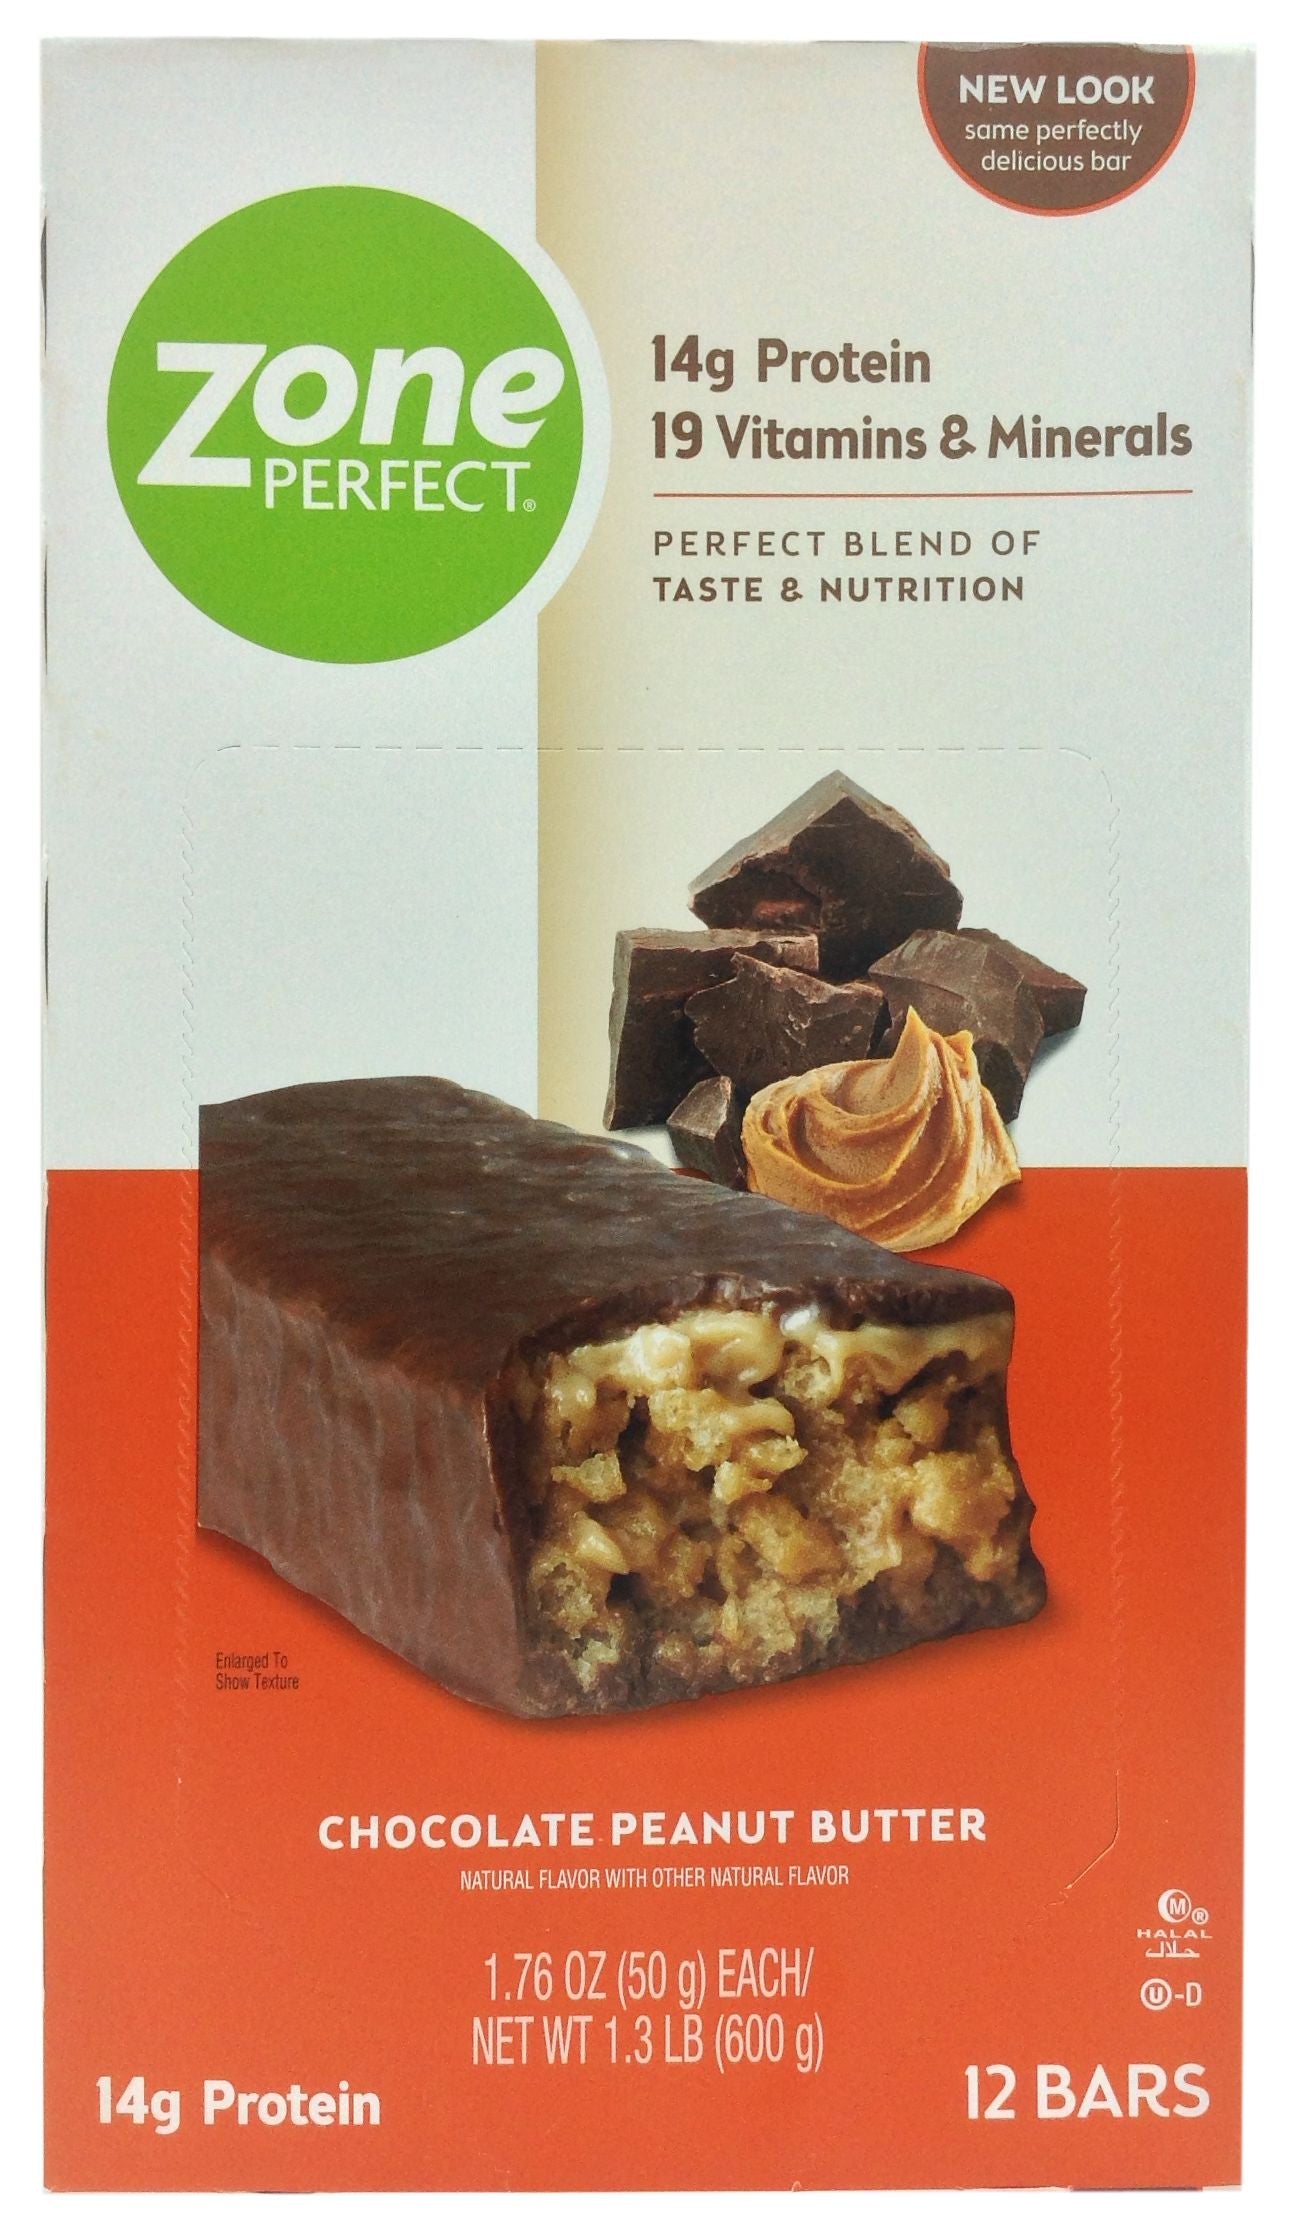 #Flavor_Chocolate Peanut Butter #Size_12 bars